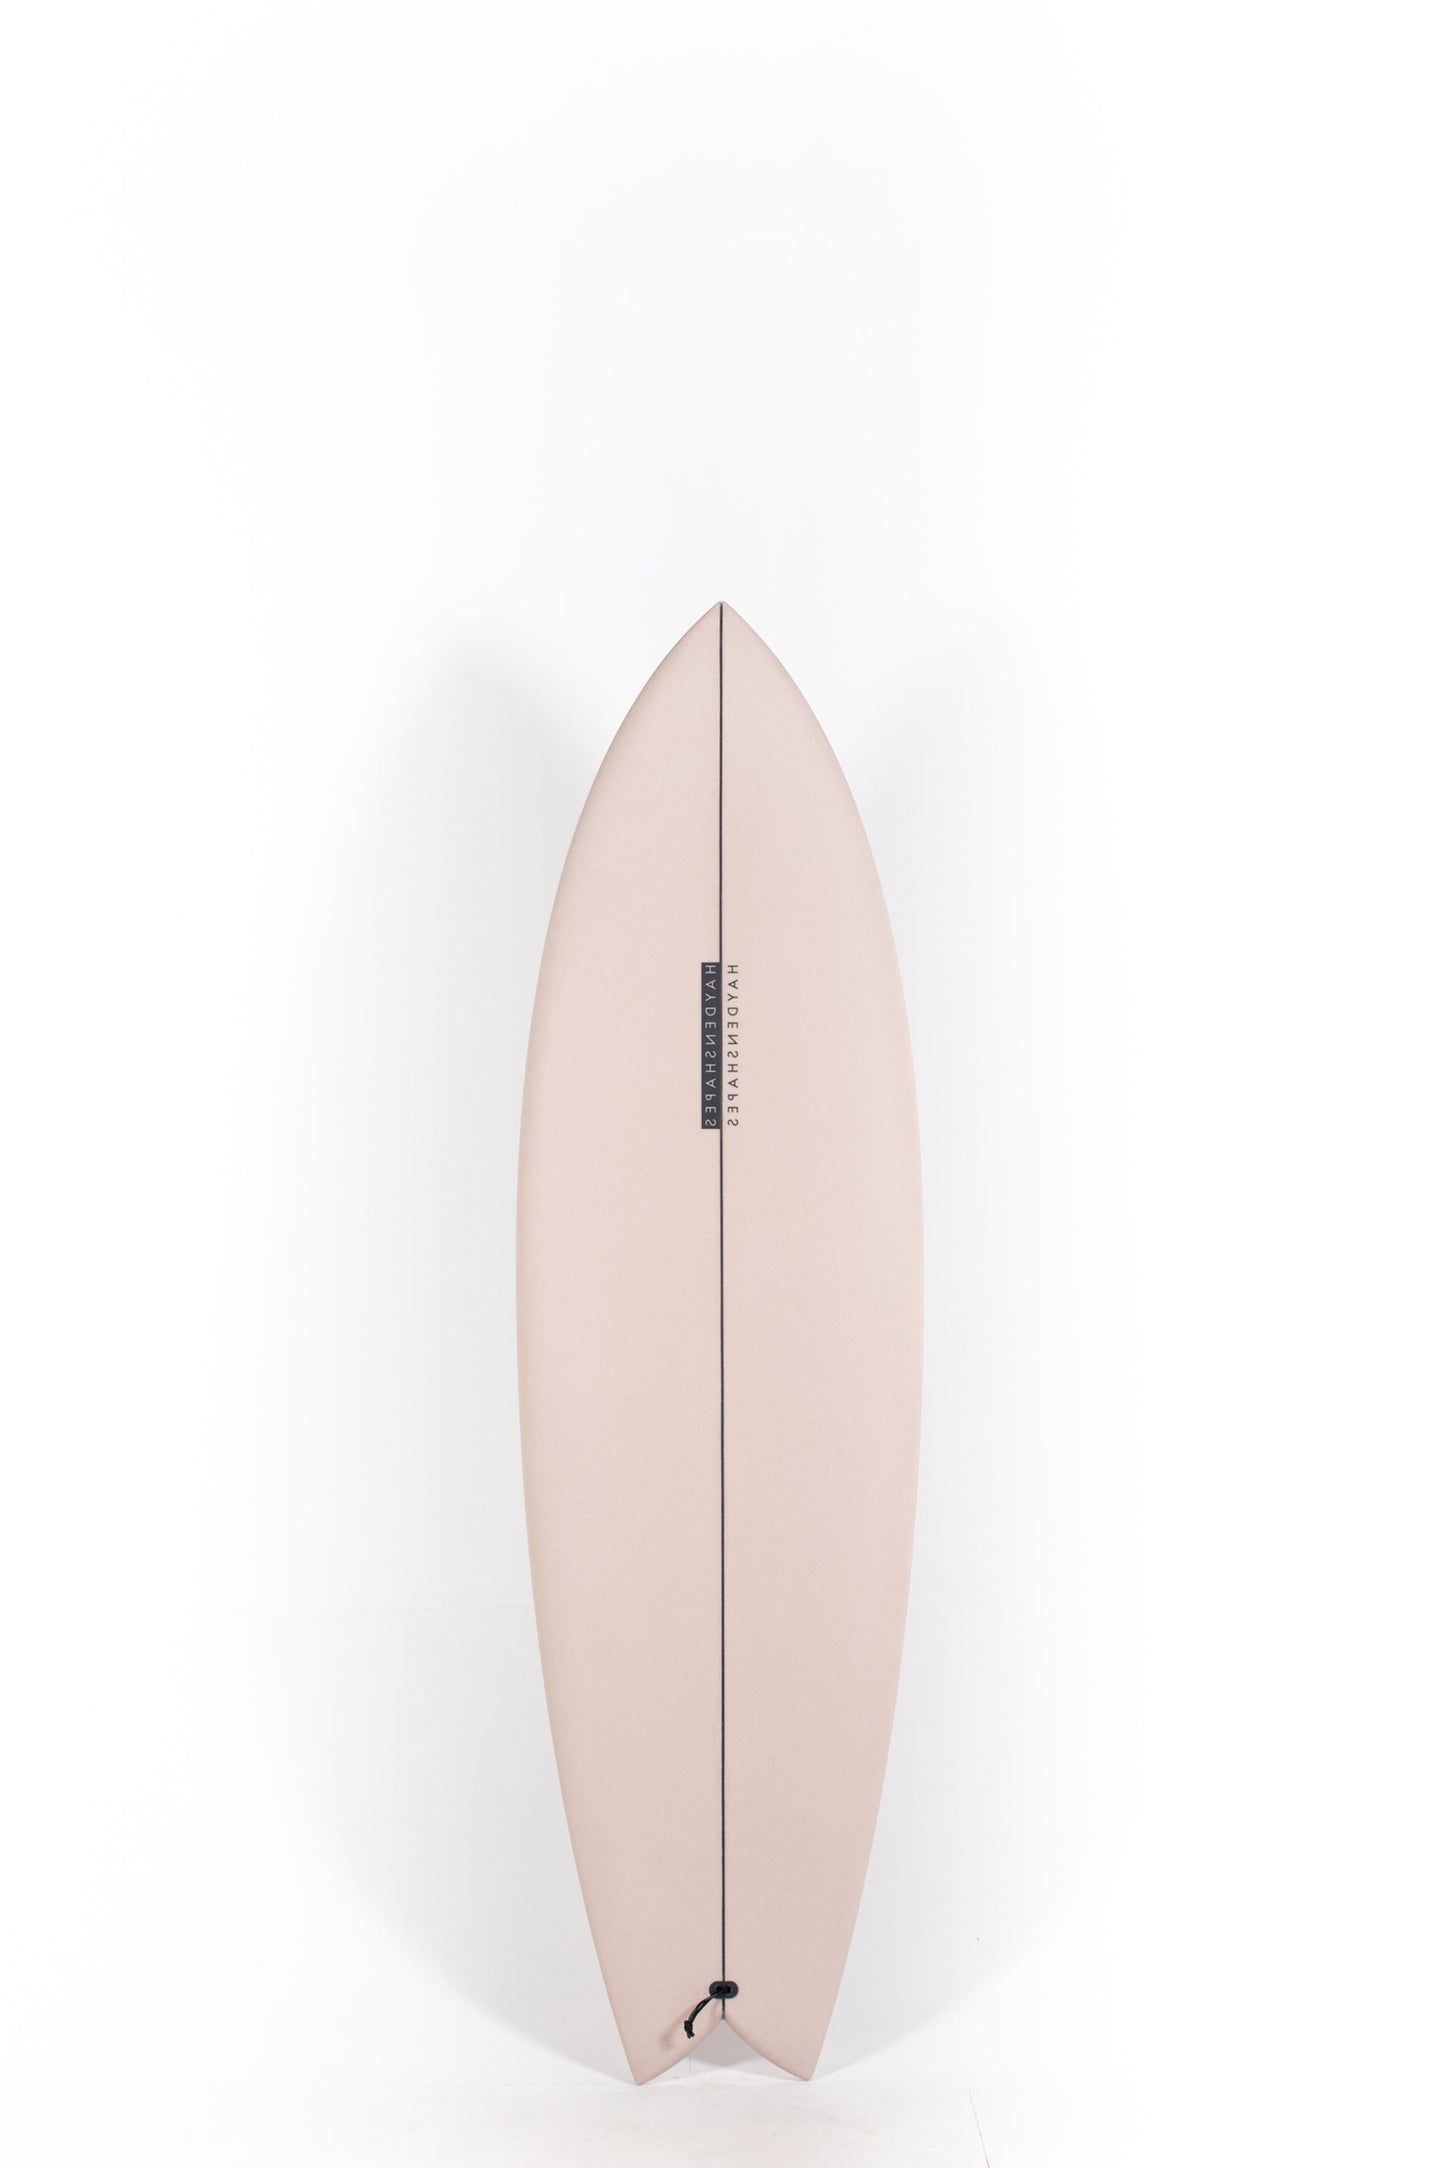 Pukas Surf Shop - HaydenShapes Surfboard - HYPTO KRYPTO TWIN PU - 6'6" X 21 1/2" X 3" - 45.8L